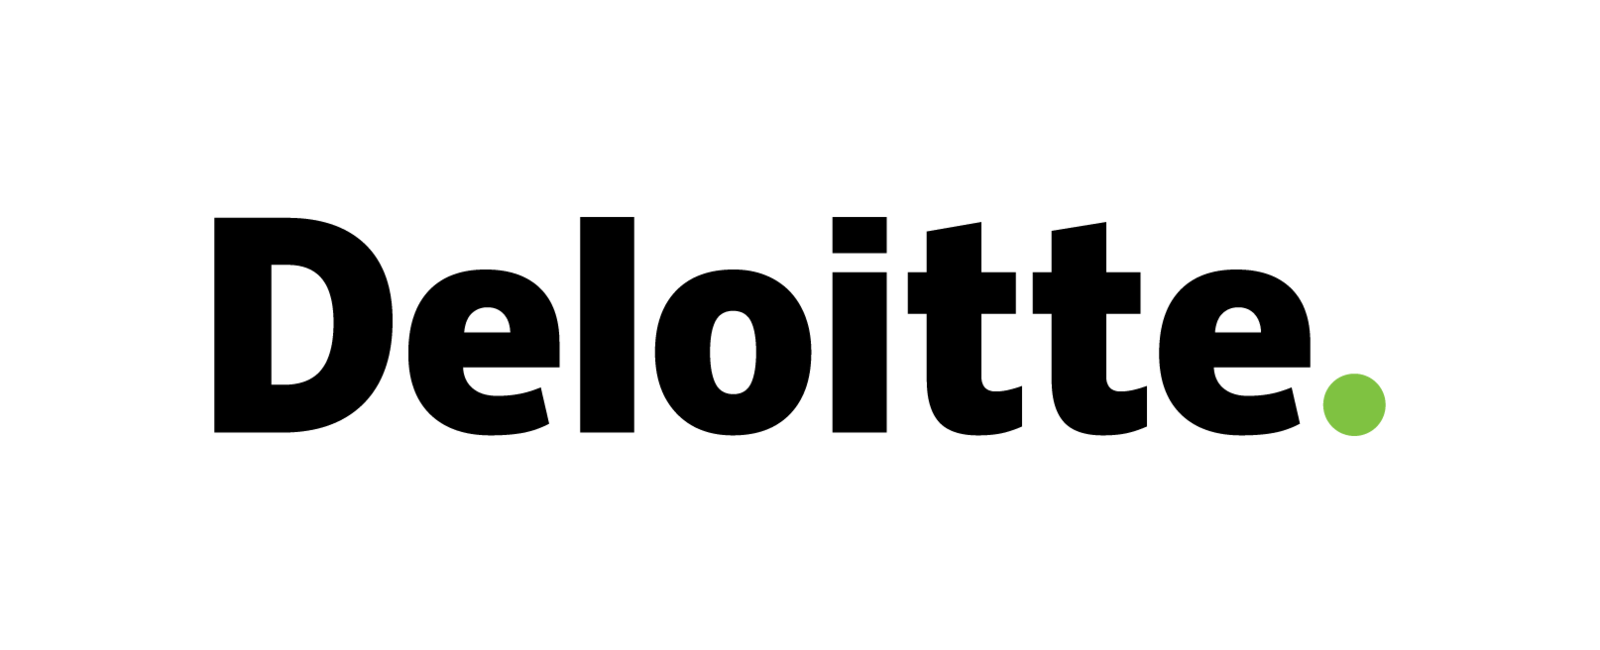 Deloitte-Customer-Experience-quote